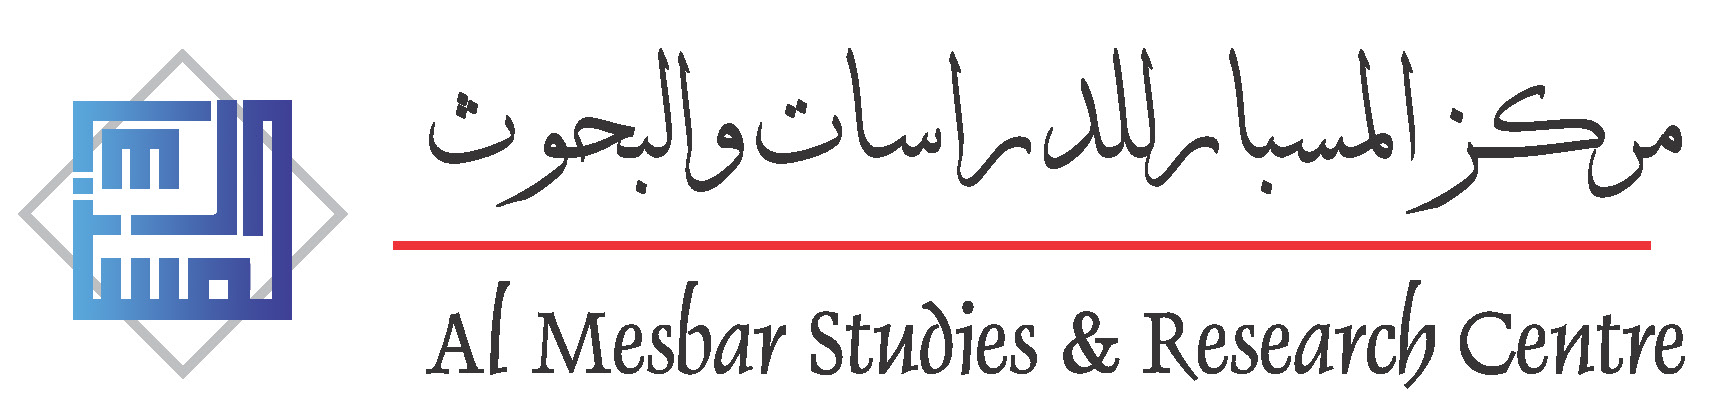 Al Mesbar Studies & Research Center